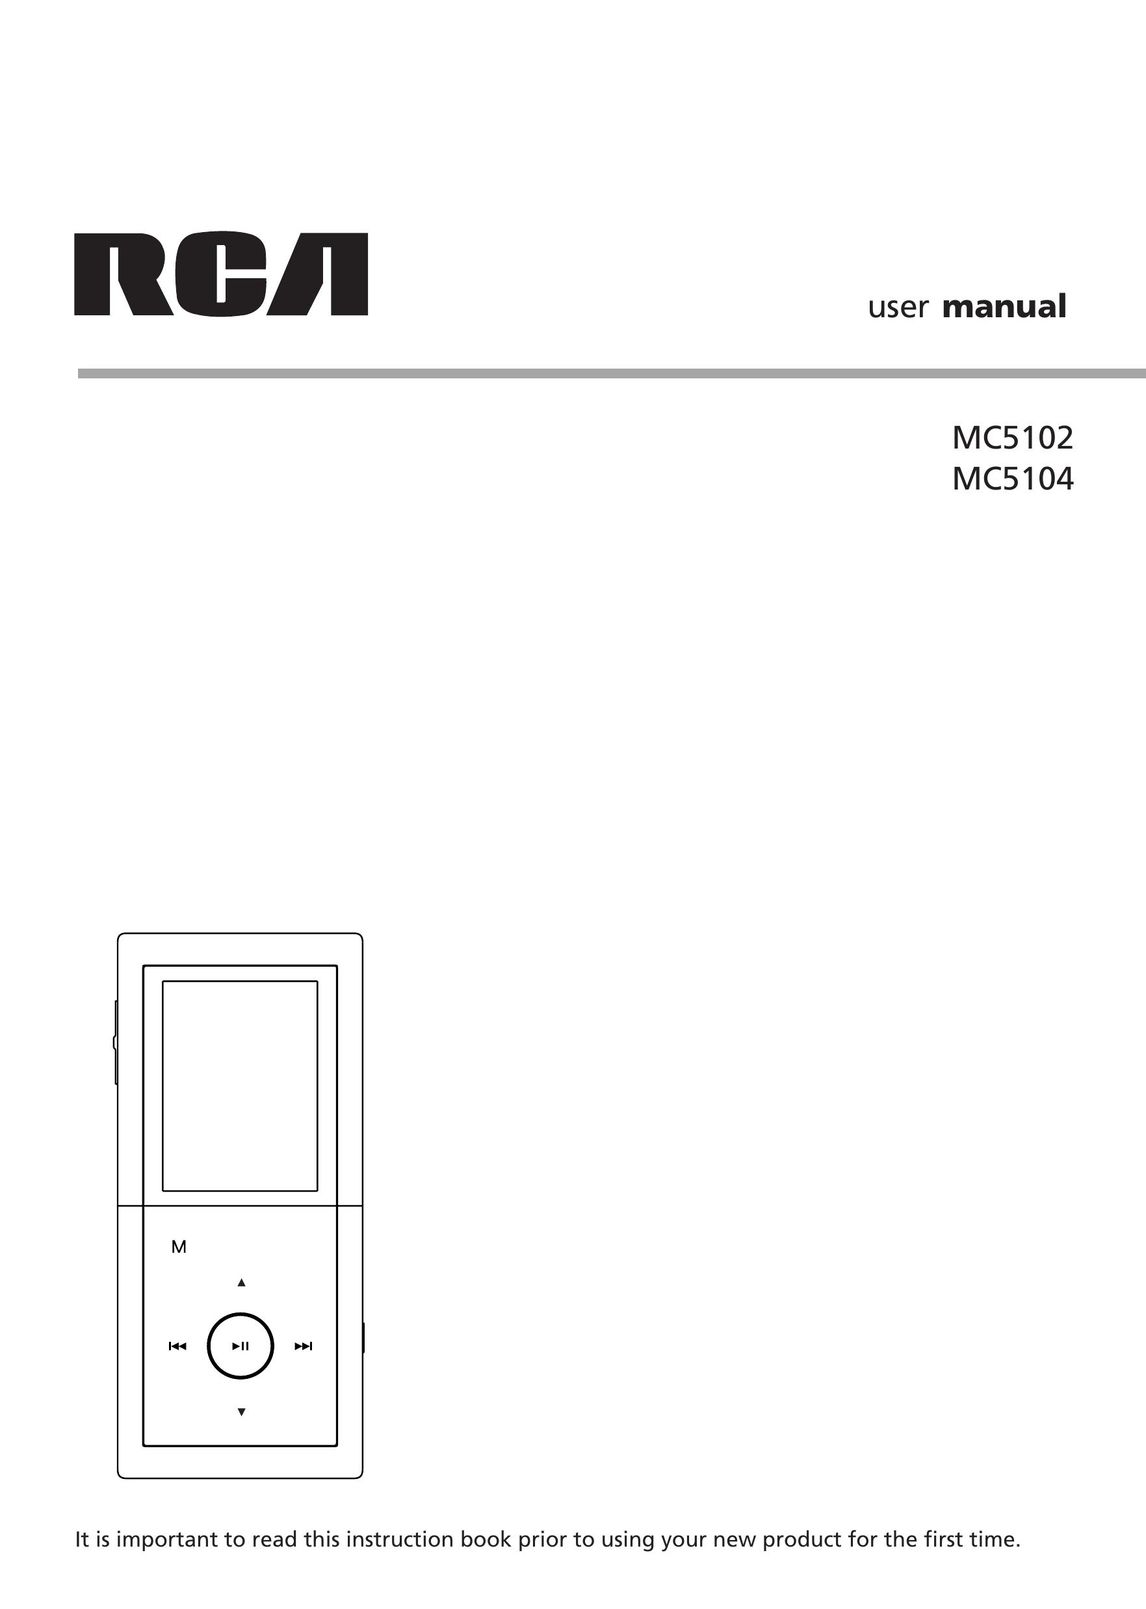 RCA MC5104 Car Stereo System User Manual